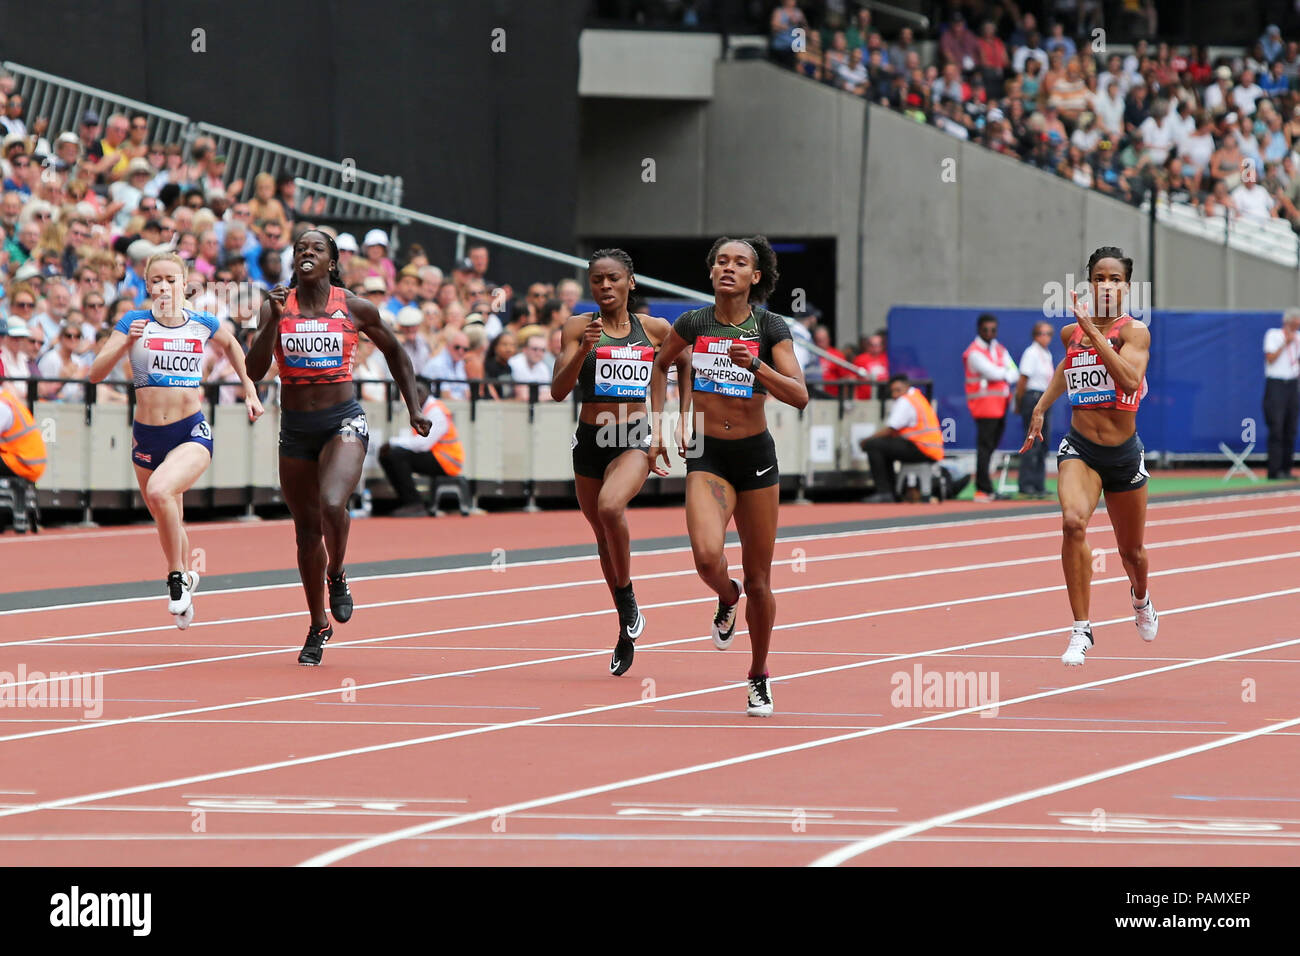 Anastasia LE-ROY, Stephenie Ann MCPHERSON, Courtney OKOLO, Anyika ONUORA, Amy ALLCOCK läuft in 400 m der Frauen, 2018 IAAF Diamond League, London UK Stockfoto